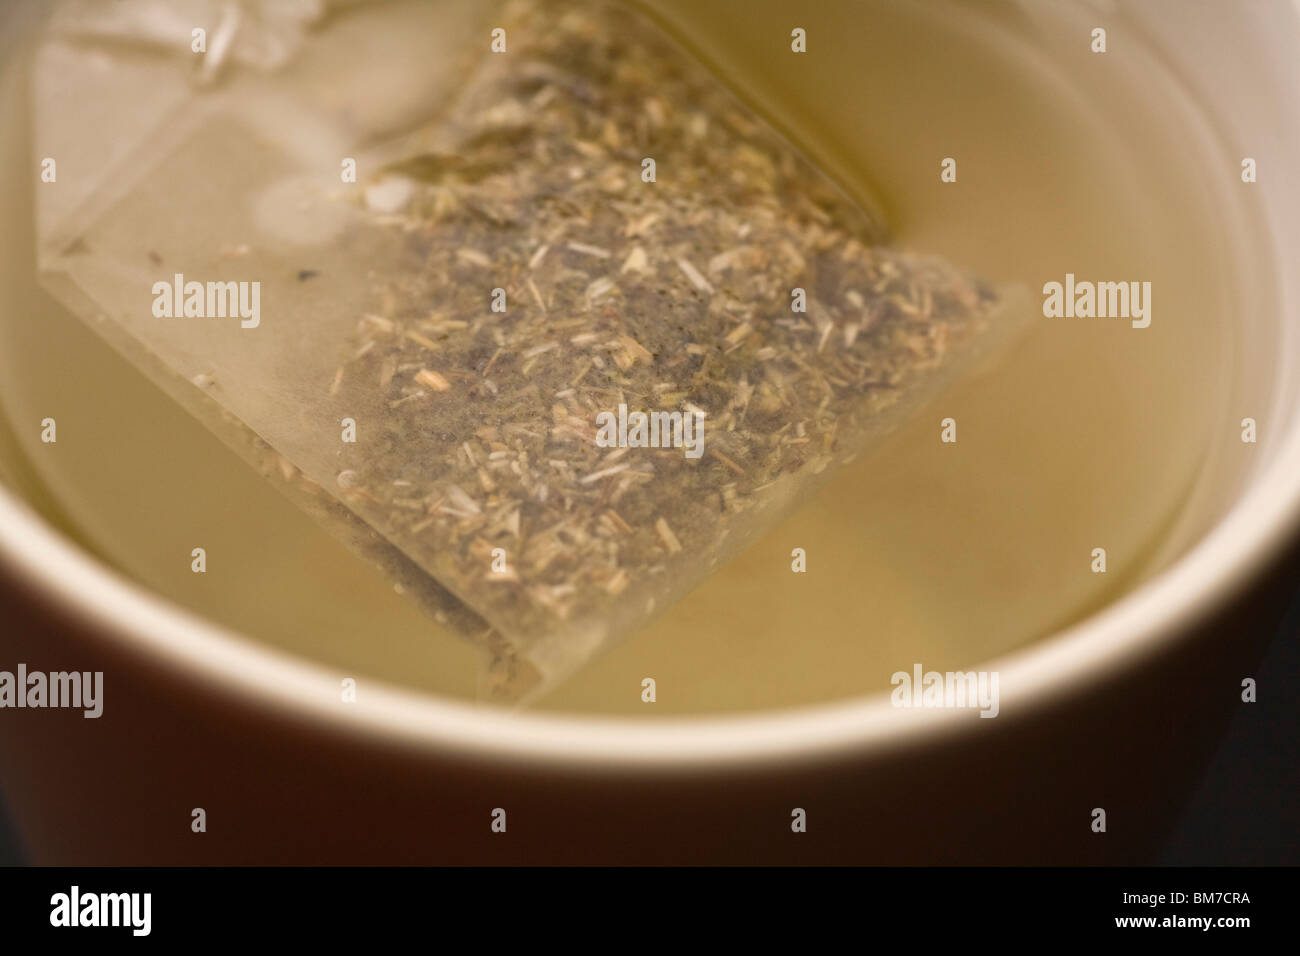 Detalle de una bolsita de té en una taza de agua Foto de stock